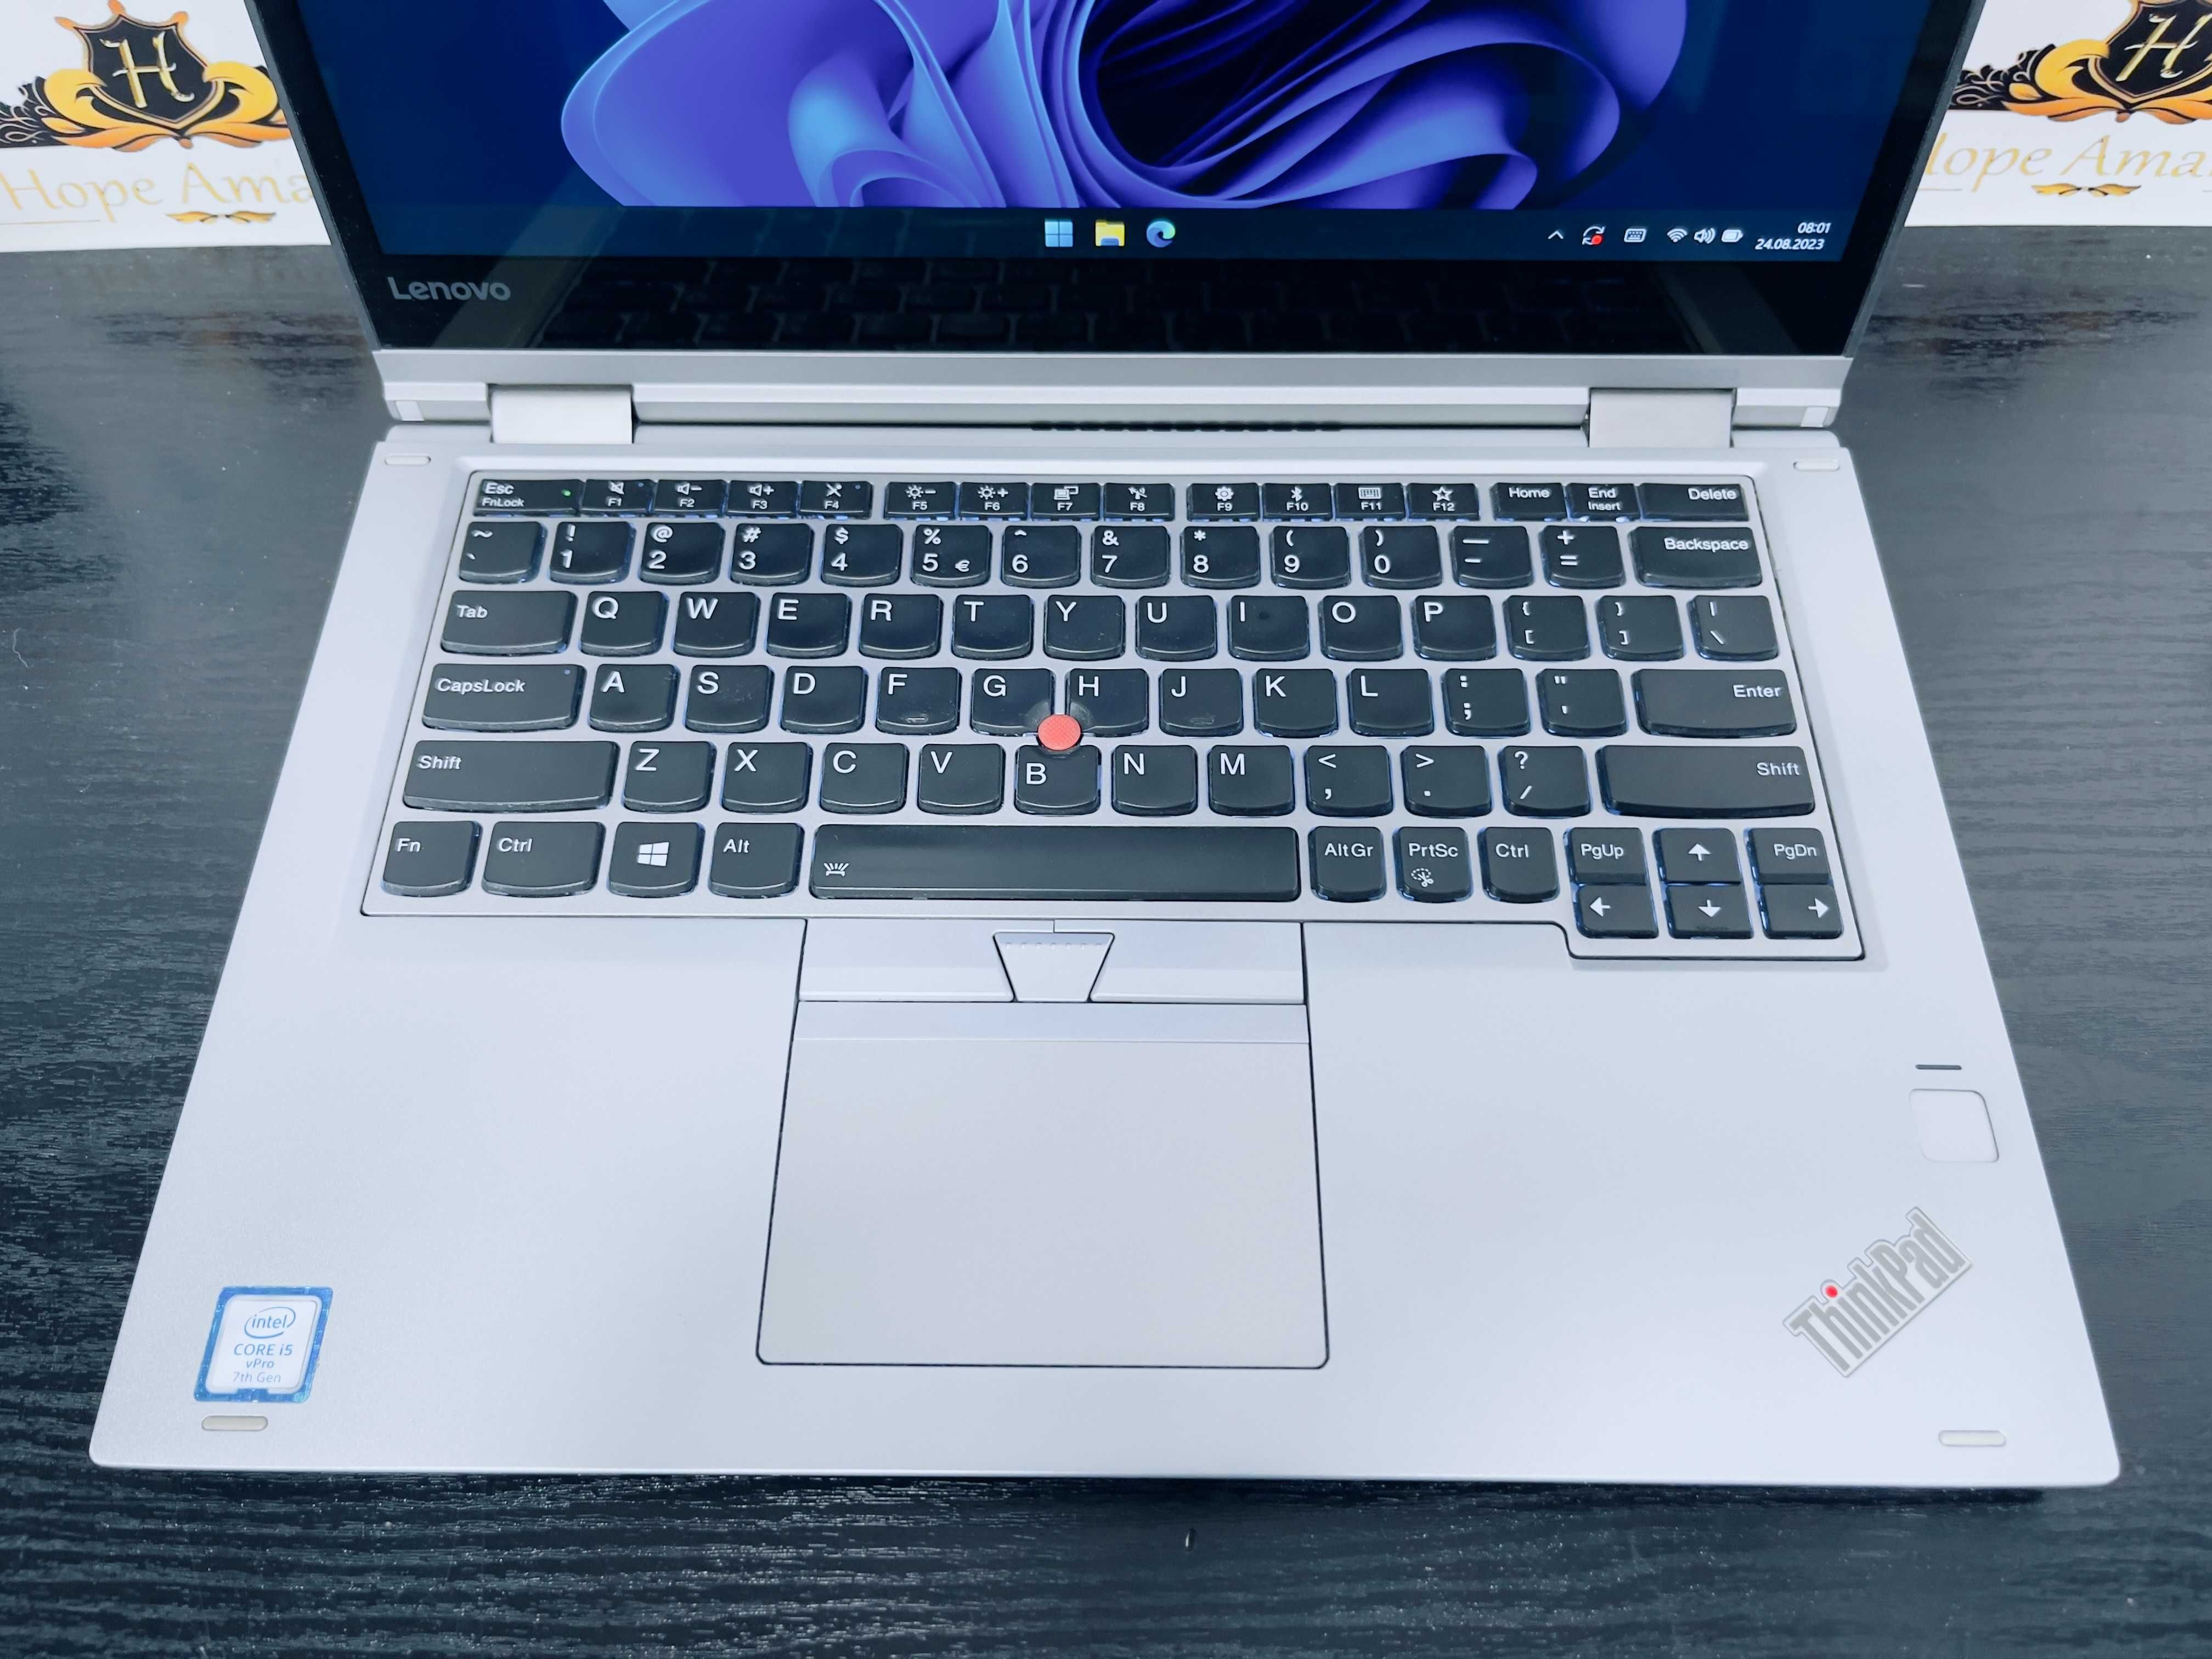 Hope Amanet P10/Laptop Lenovo ThinkPad Yoga 370 i5 SSD TouchScreen